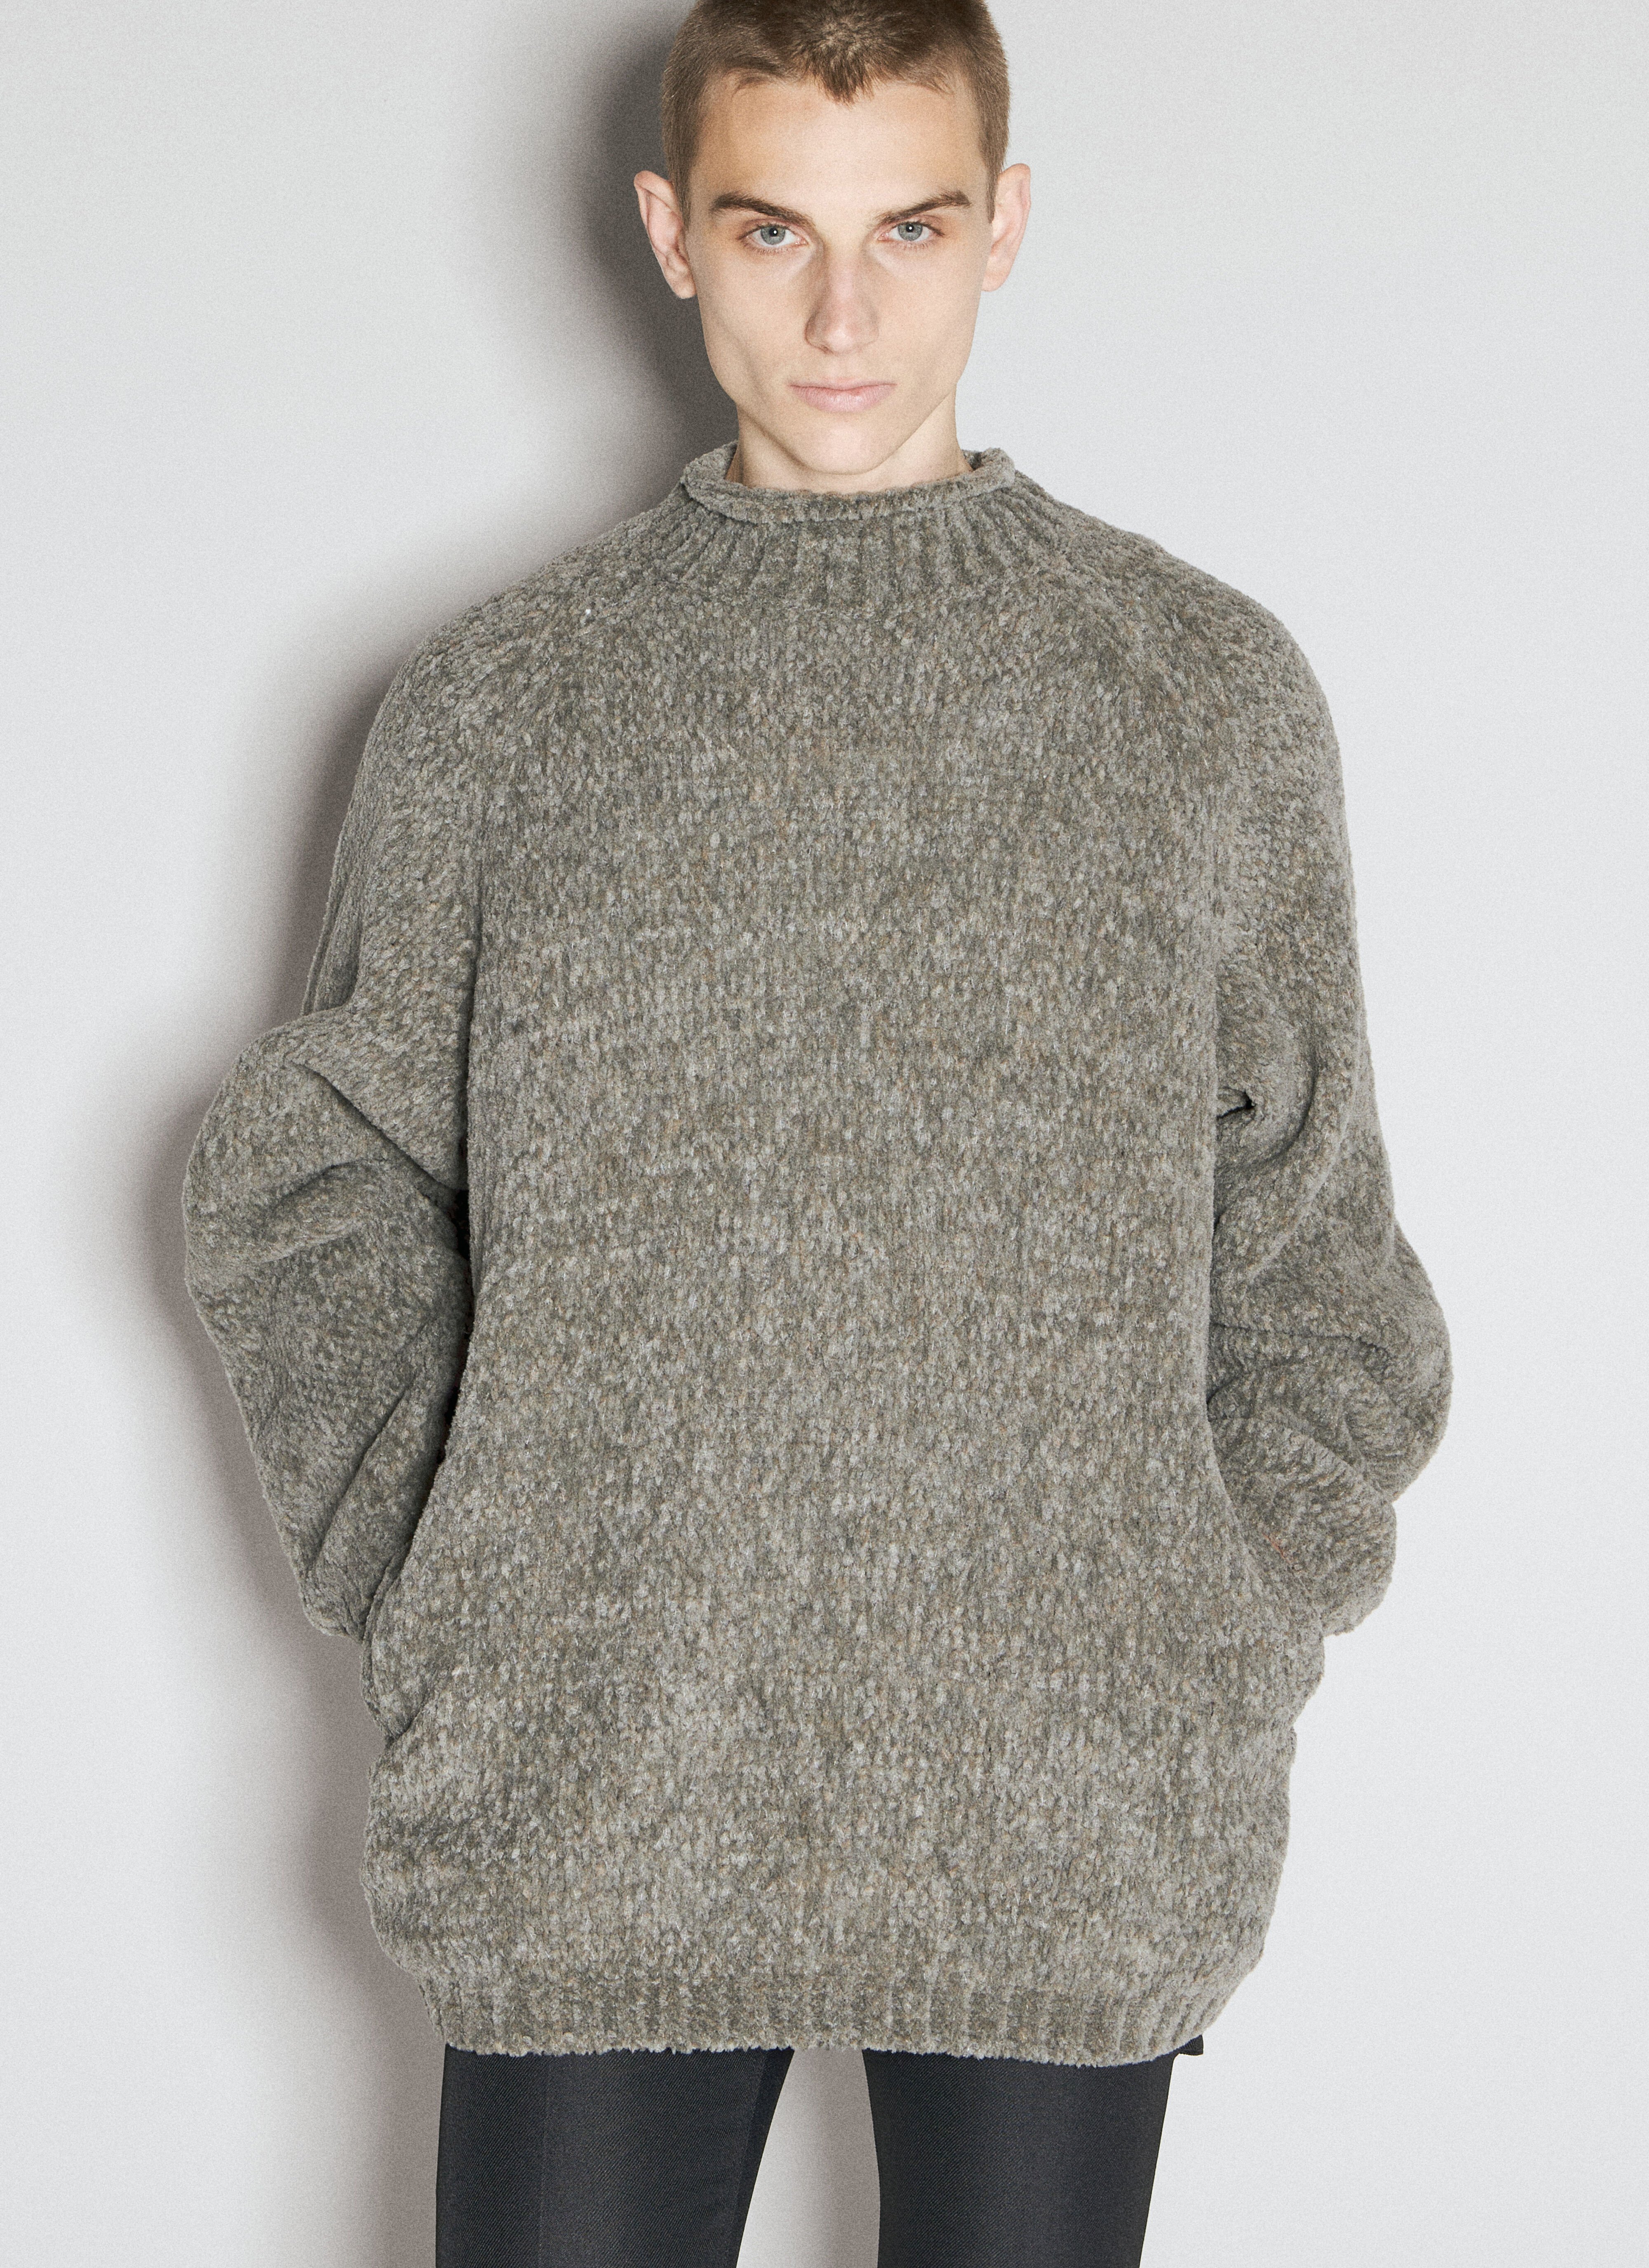 Balmain High Neck Sweater Black bln0153010